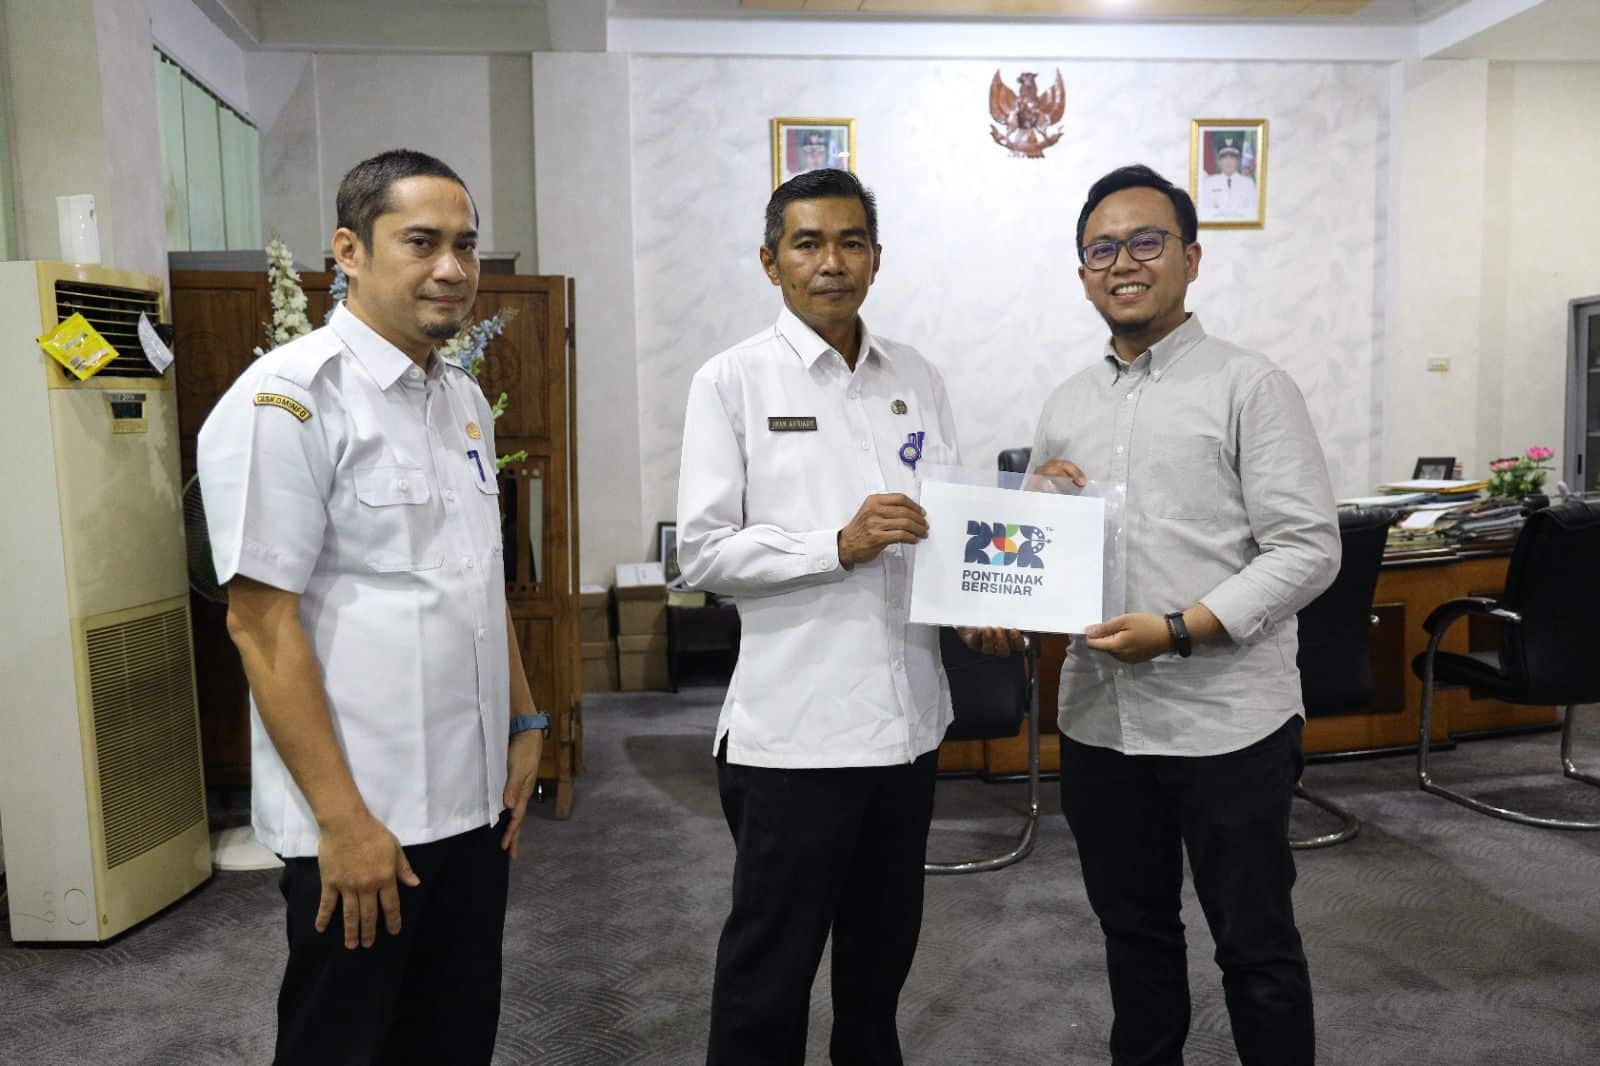 Ketua Panitia Hari Jadi ke-252 Pontianak, Iwan Amriady menerima hasil akhir sayembara logo dari CEO Pontinesia, Ridho Brilliantoro. (Foto: Kominfo/Prokopim Pontianak)